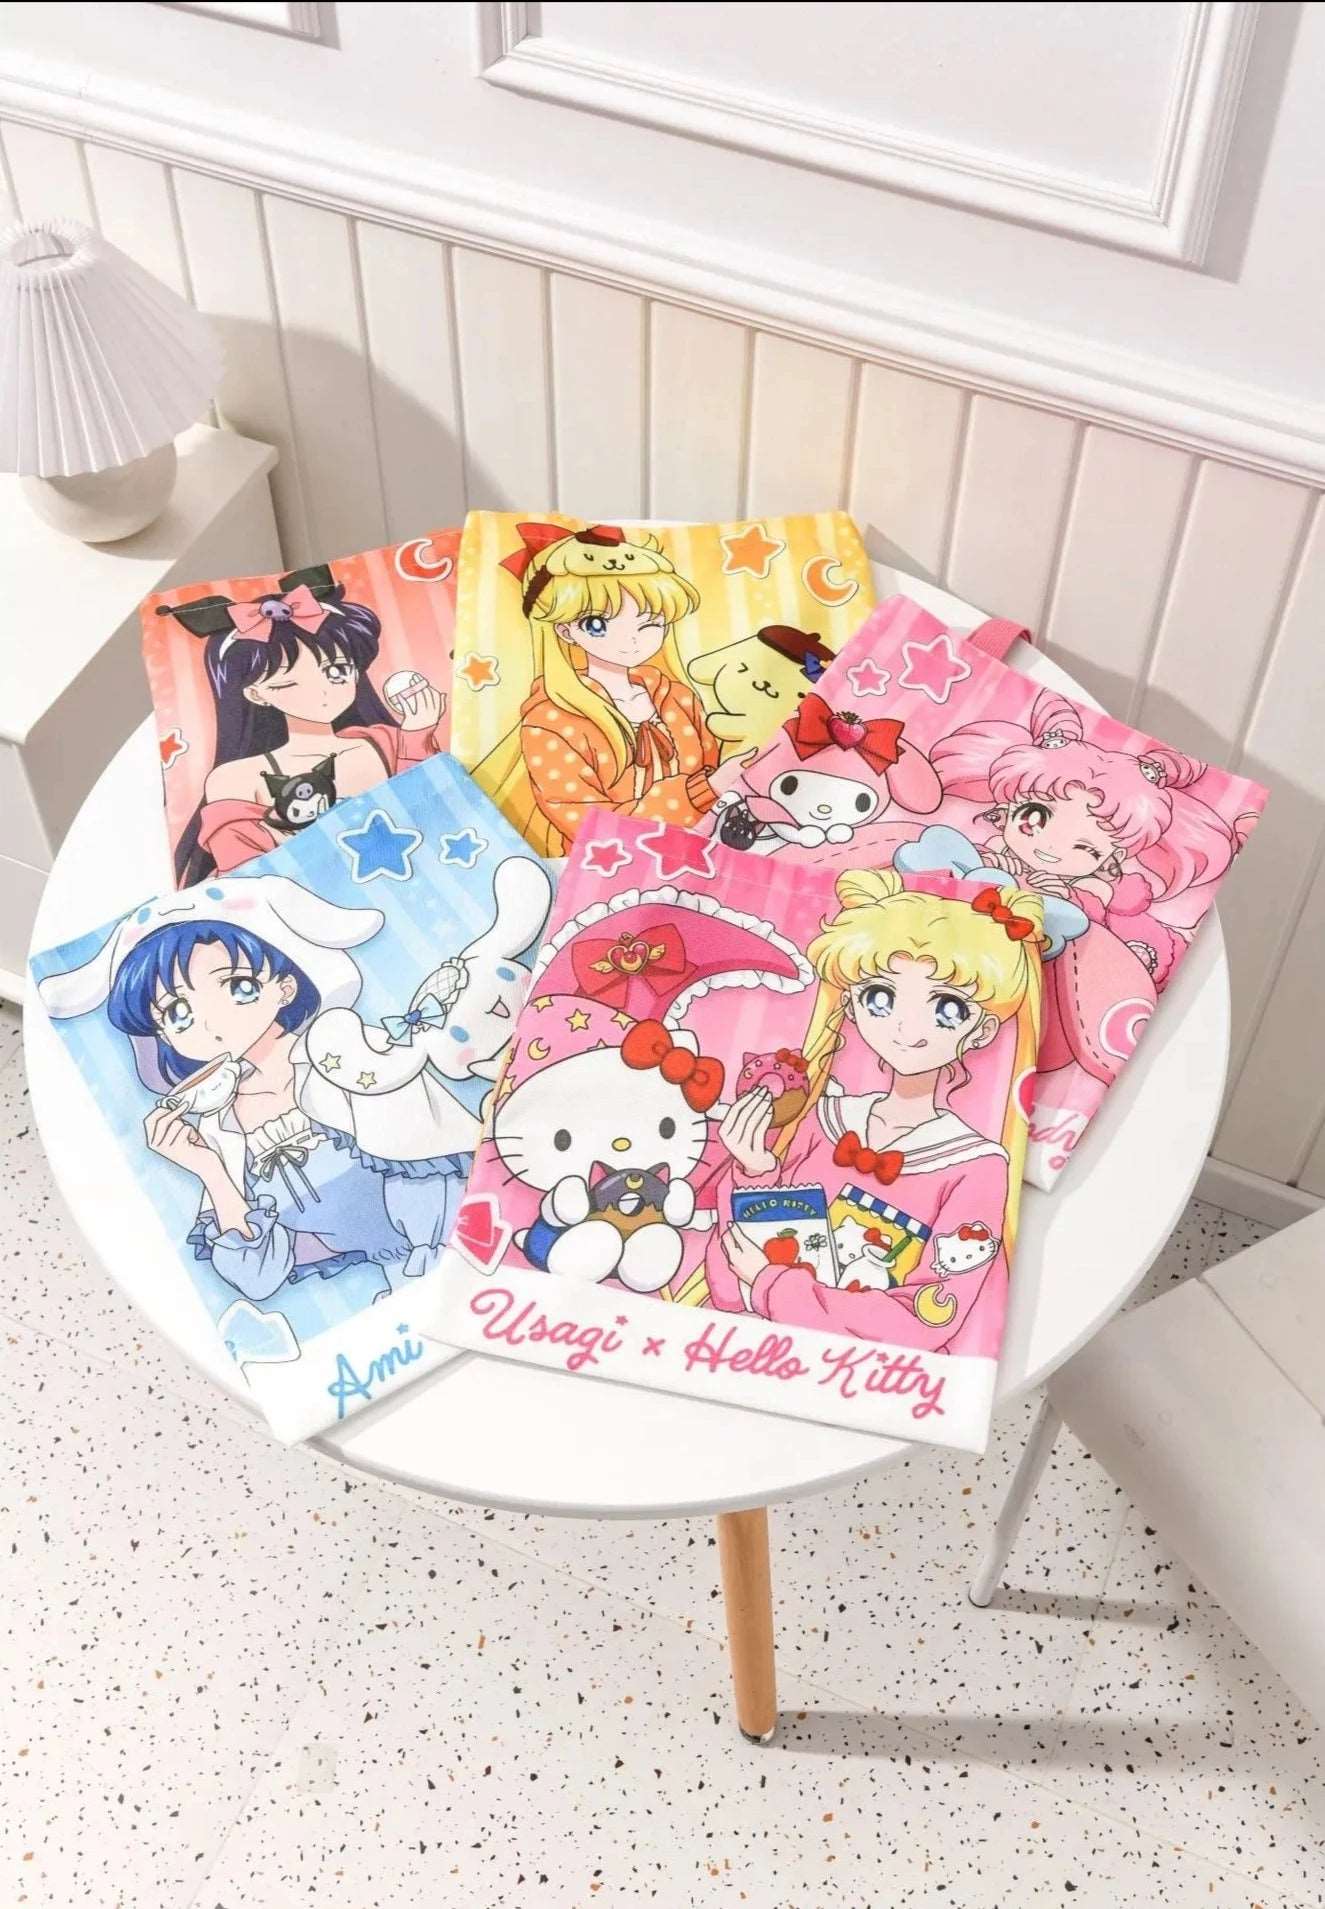 Usagi Tsukino x Hello Kitty Pink Canvas Tote Bag